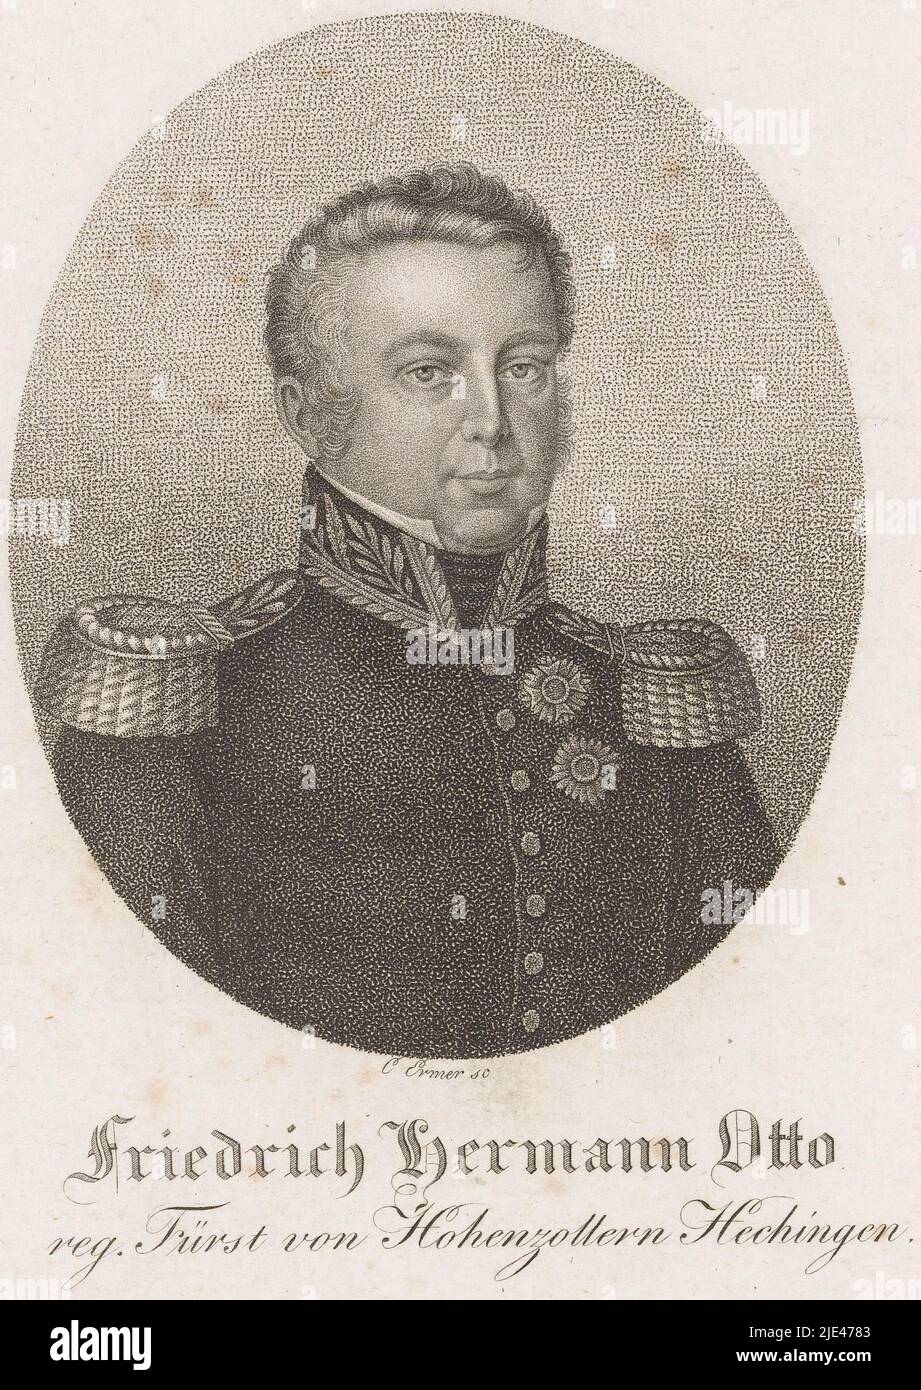 Portrait of Friedrich von Hohenzollern Hechingen, Christian Ermer, 1796 - 1855, print maker: Christian Ermer, (mentioned on object), 1796 - 1855, paper, h 161 mm - w 107 mm Stock Photo